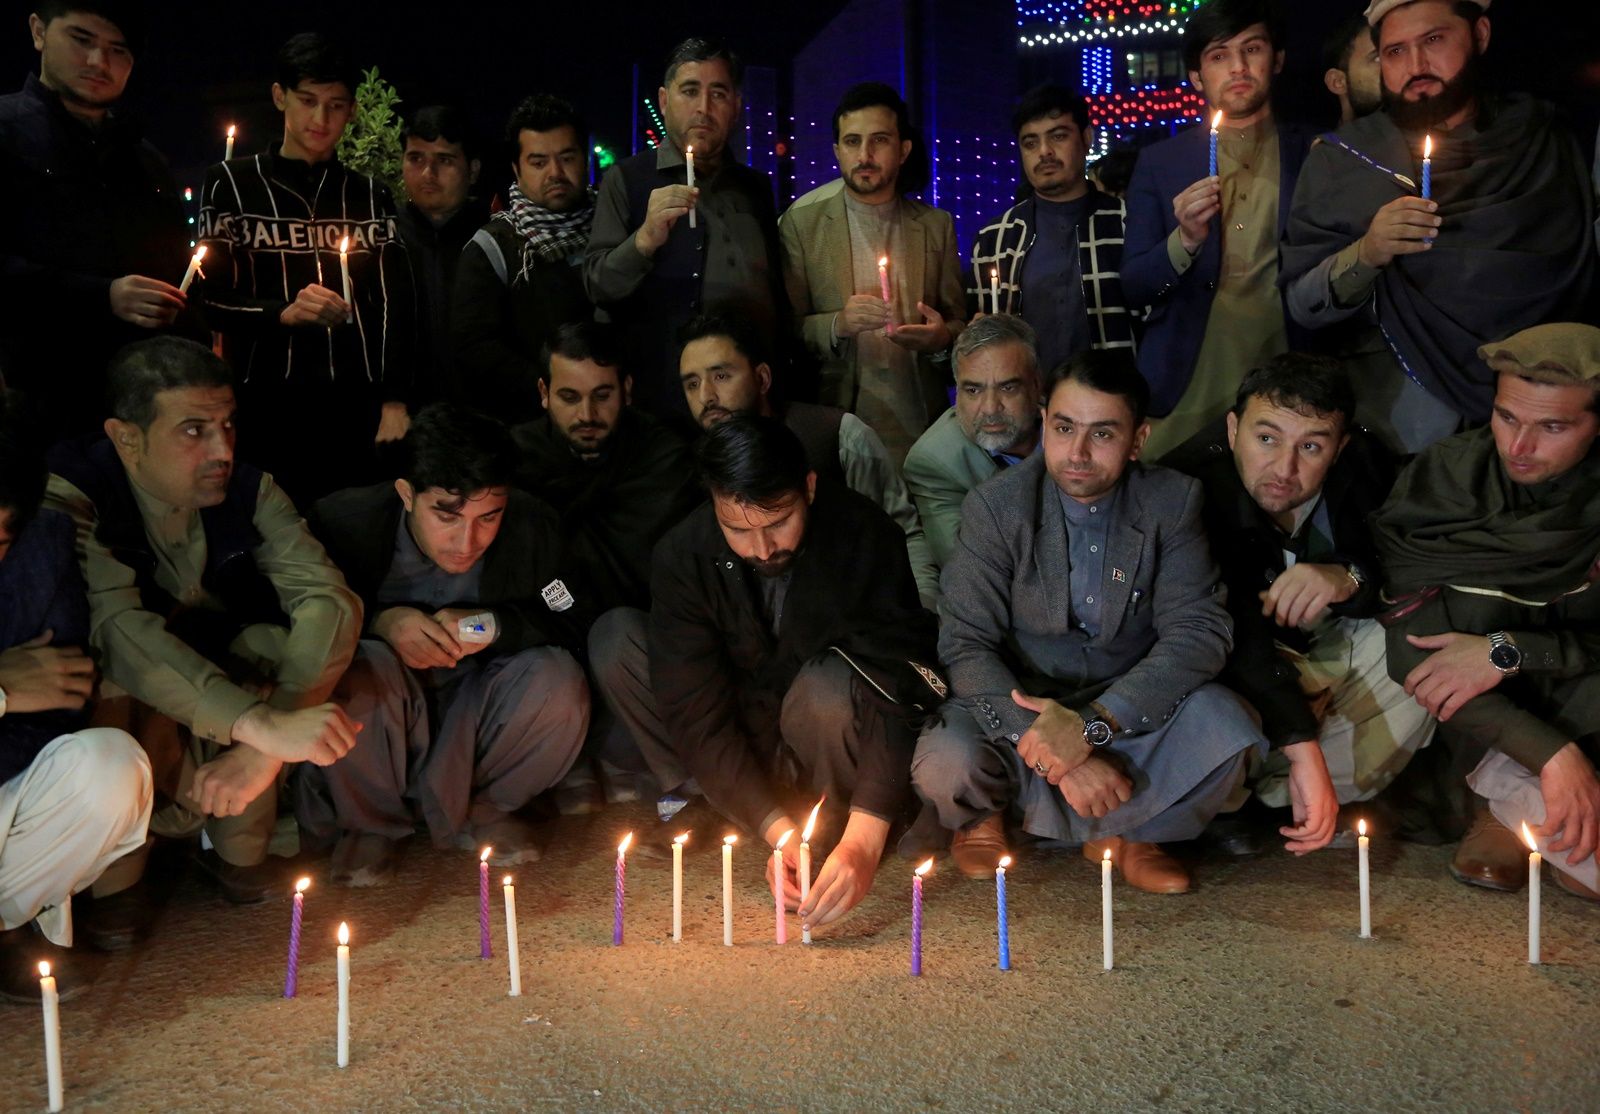 REUTERS-ชาวอัฟกานิสถานจุดเทียนไว้อาลัยหมอญี่ปุ่น เท็ตสึ นาคามุระ ถูกคนร้ายยิงตาย.JPG